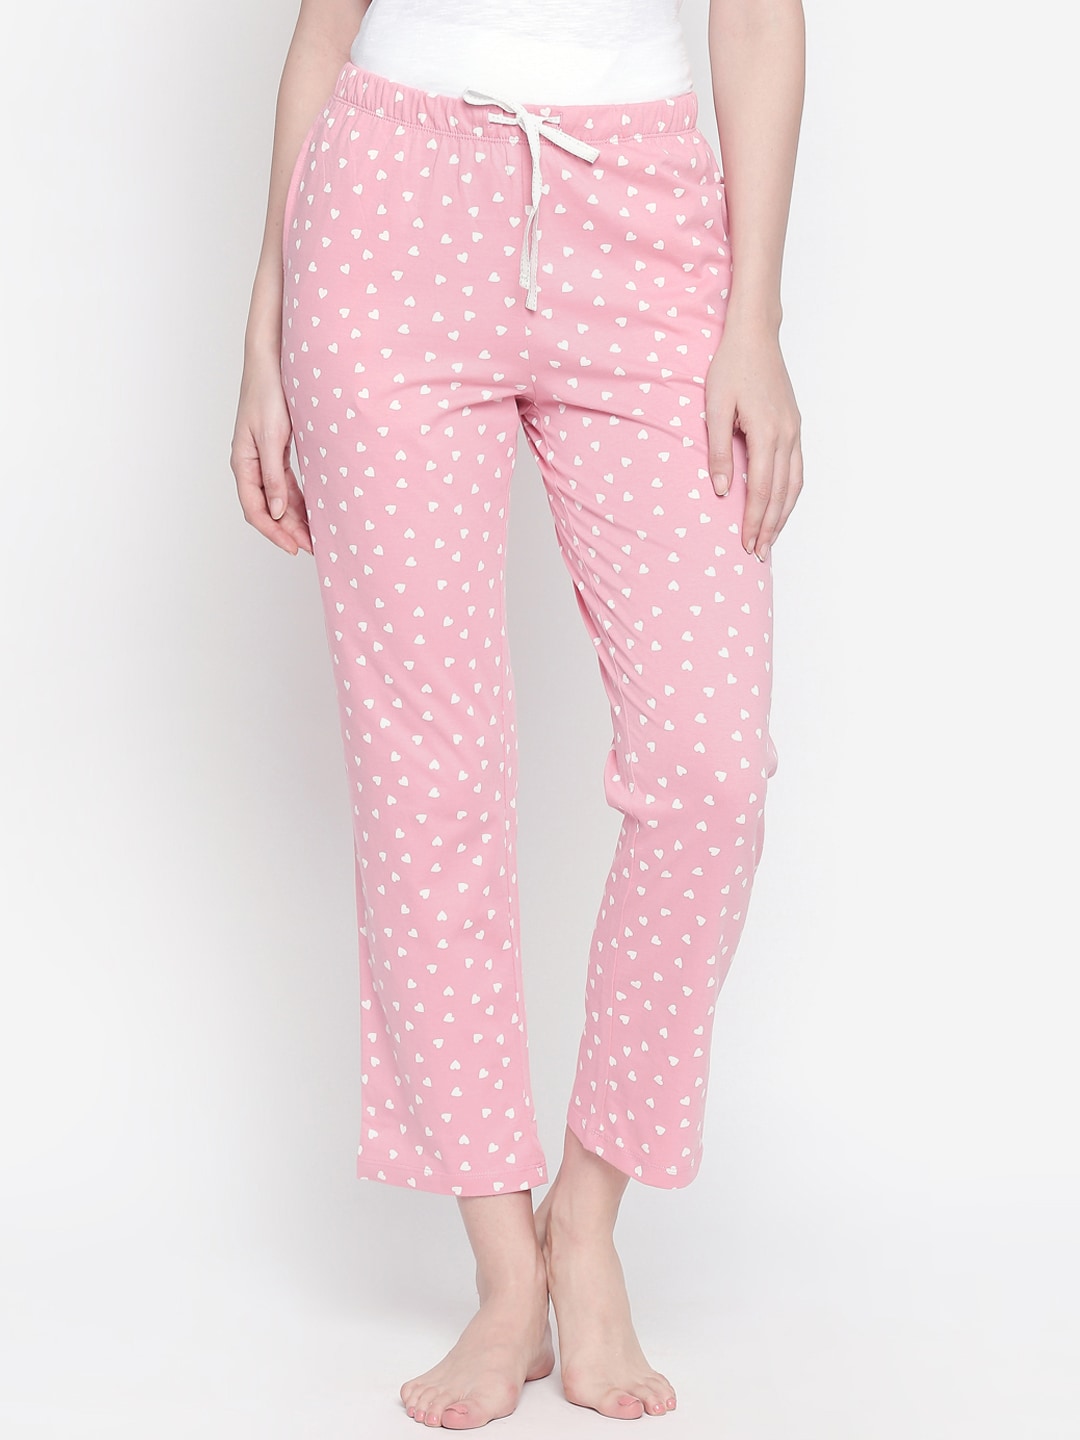 Dreamz by Pantaloons Women Pink & White Printed Lounge Pants Price in India